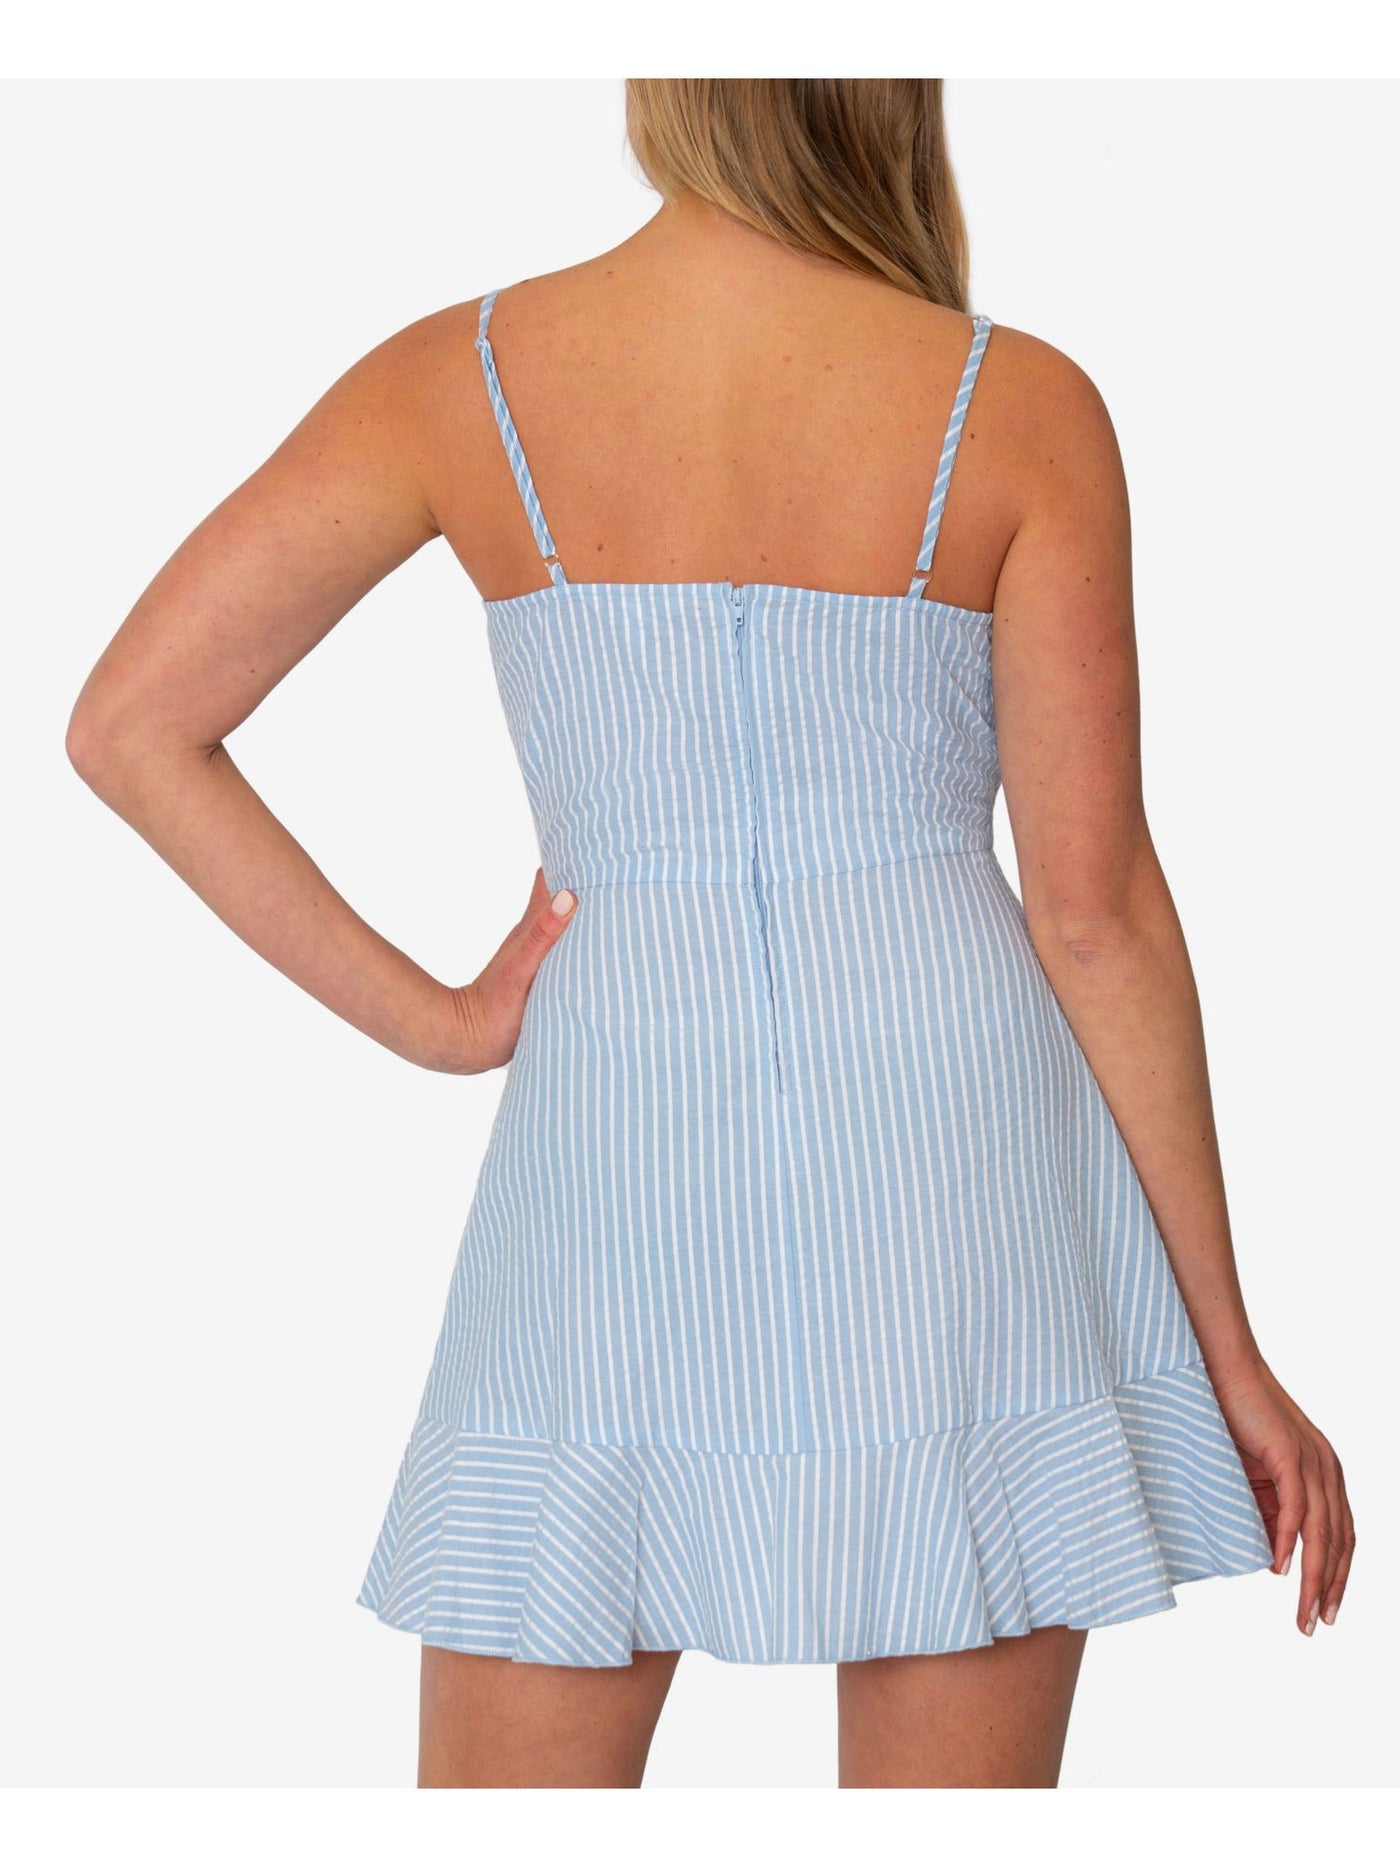 SPEECHLESS Womens Light Blue Ruffled Textured Zippered Striped Spaghetti Strap Surplice Neckline Mini Sheath Dress Juniors XS